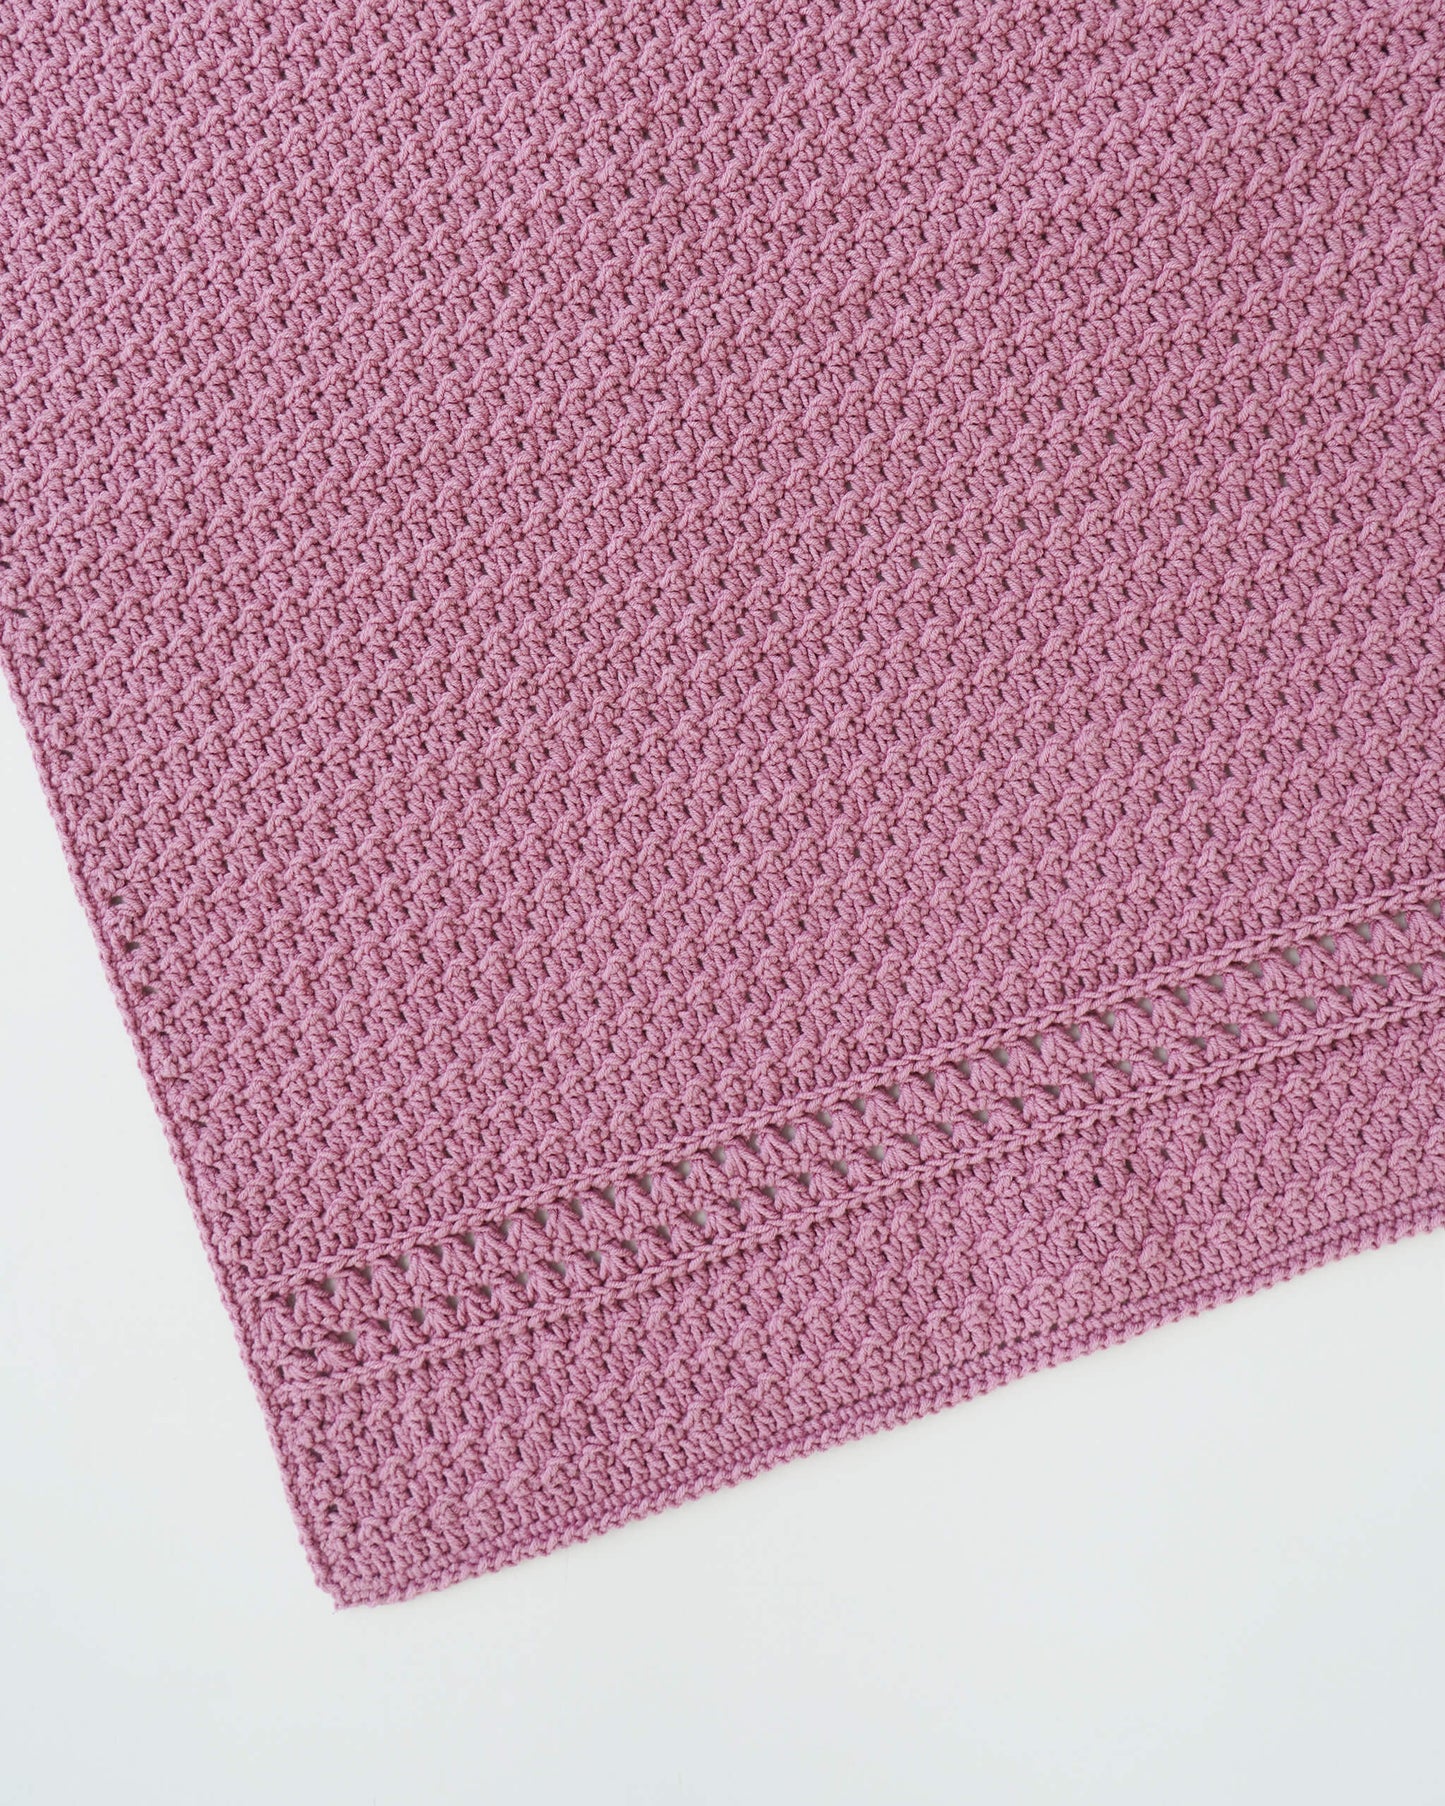 Blanket No.06 | Easy crochet pattern + Video tutorial – Daisy & Peace